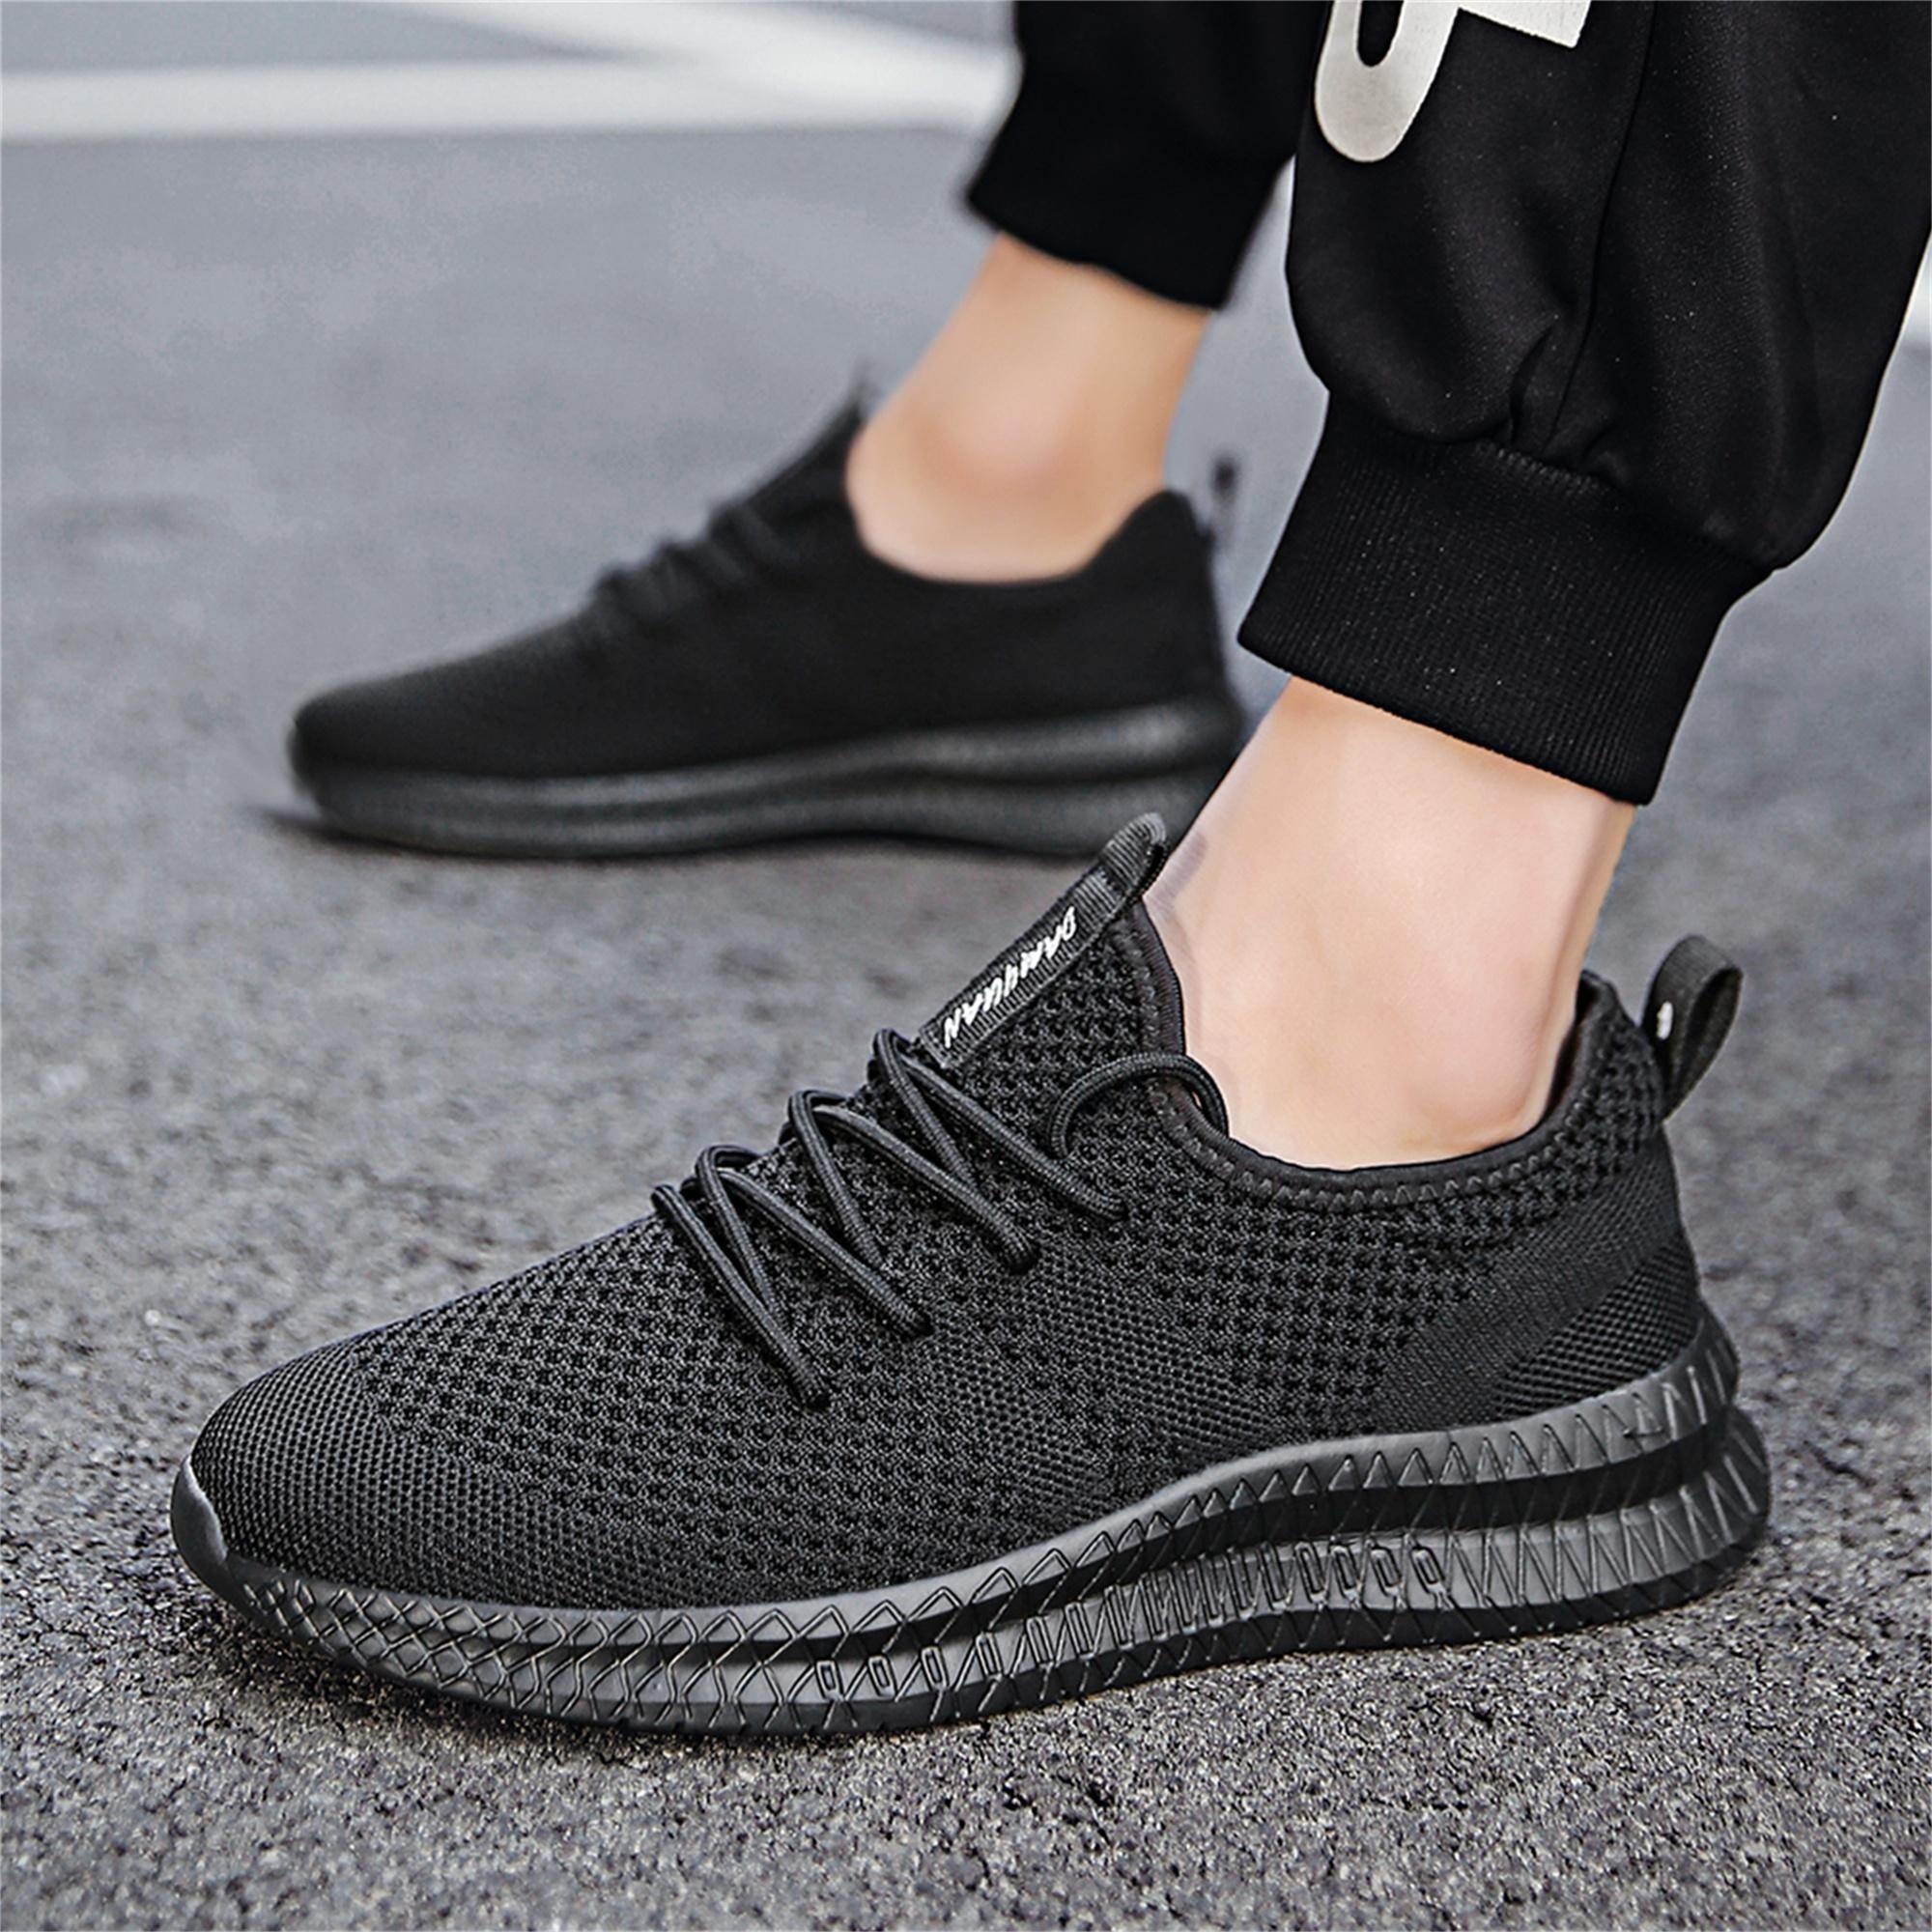 Damyuan Men Sneakers Lightweight Sport Athletic Running Shoes Comfort Casual Walking Tennis Shoes